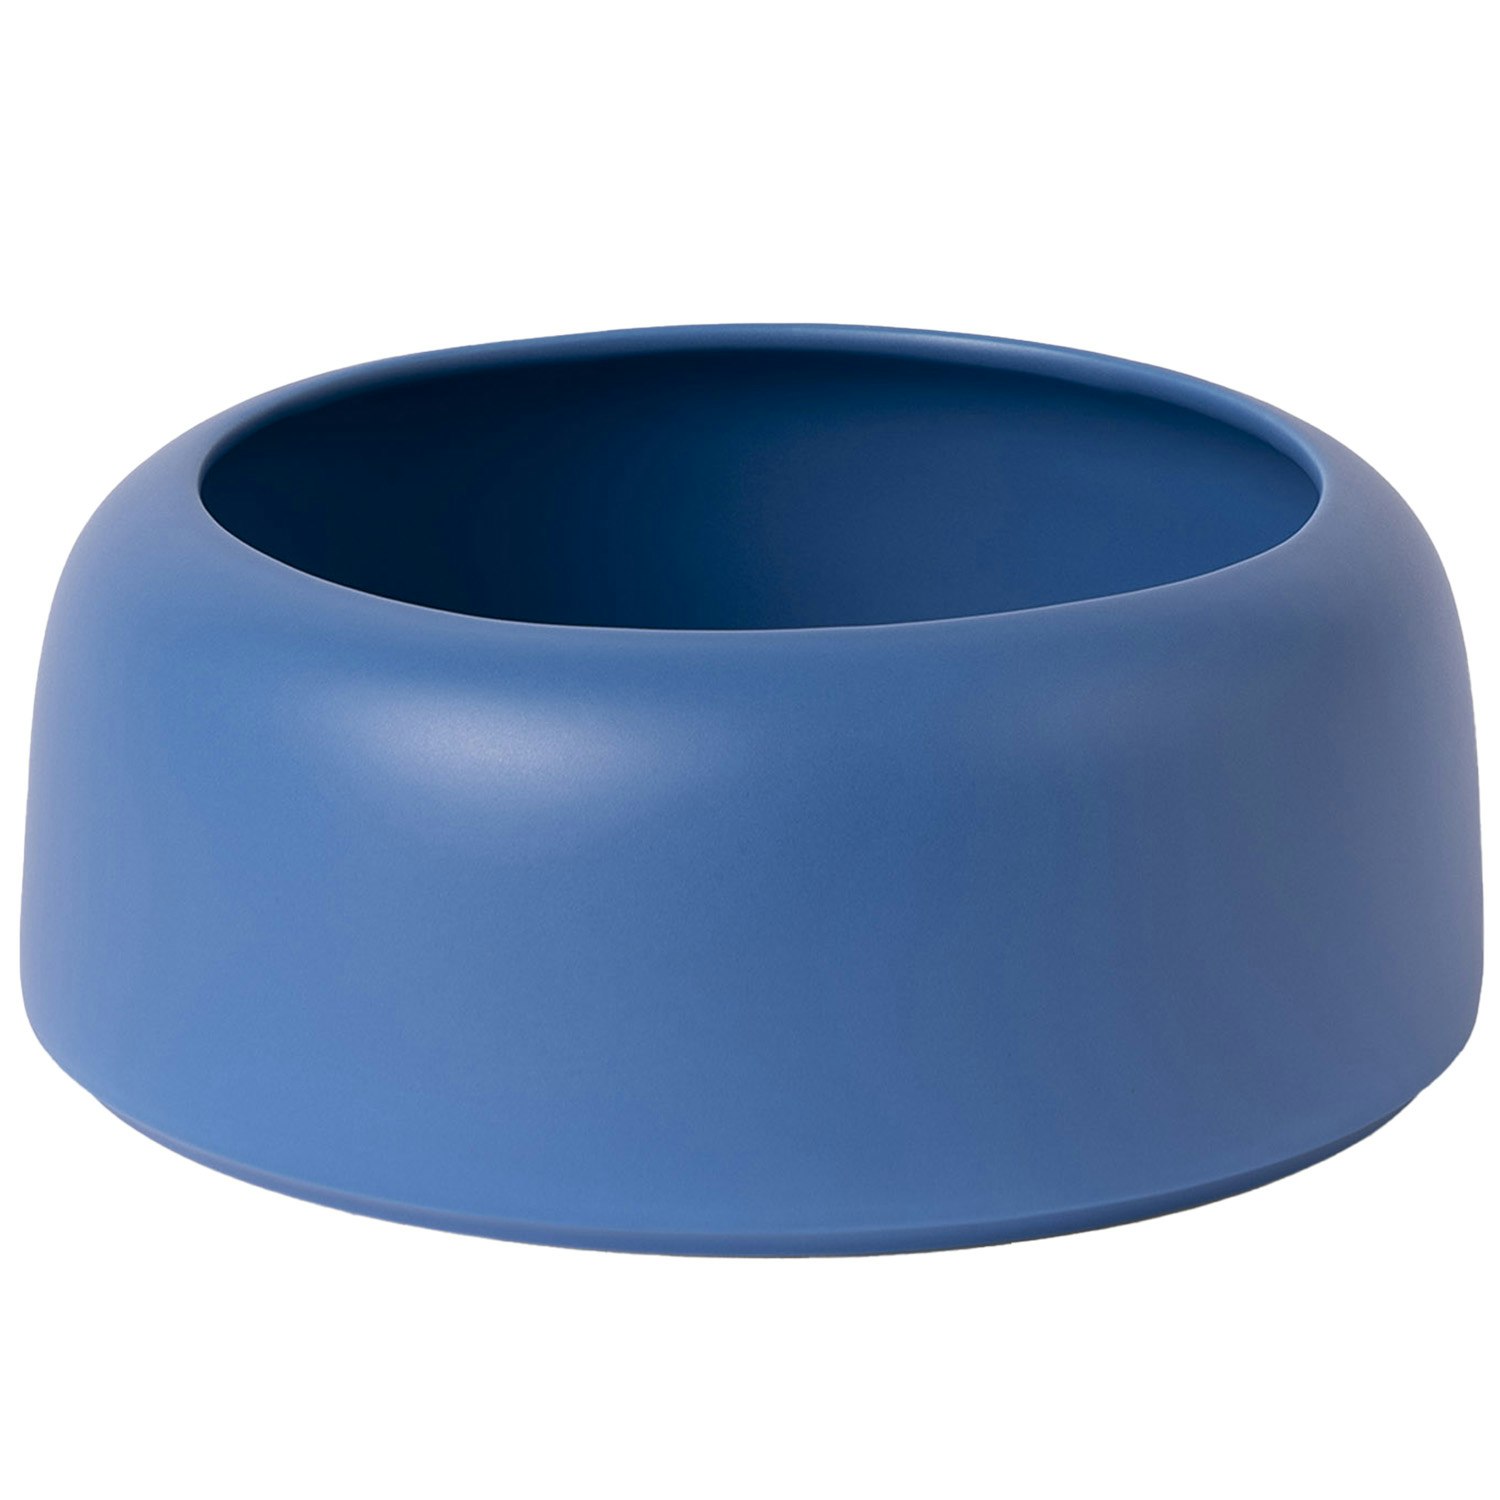 https://royaldesign.com/image/2/raawi-bowl-01-electric-blue-0